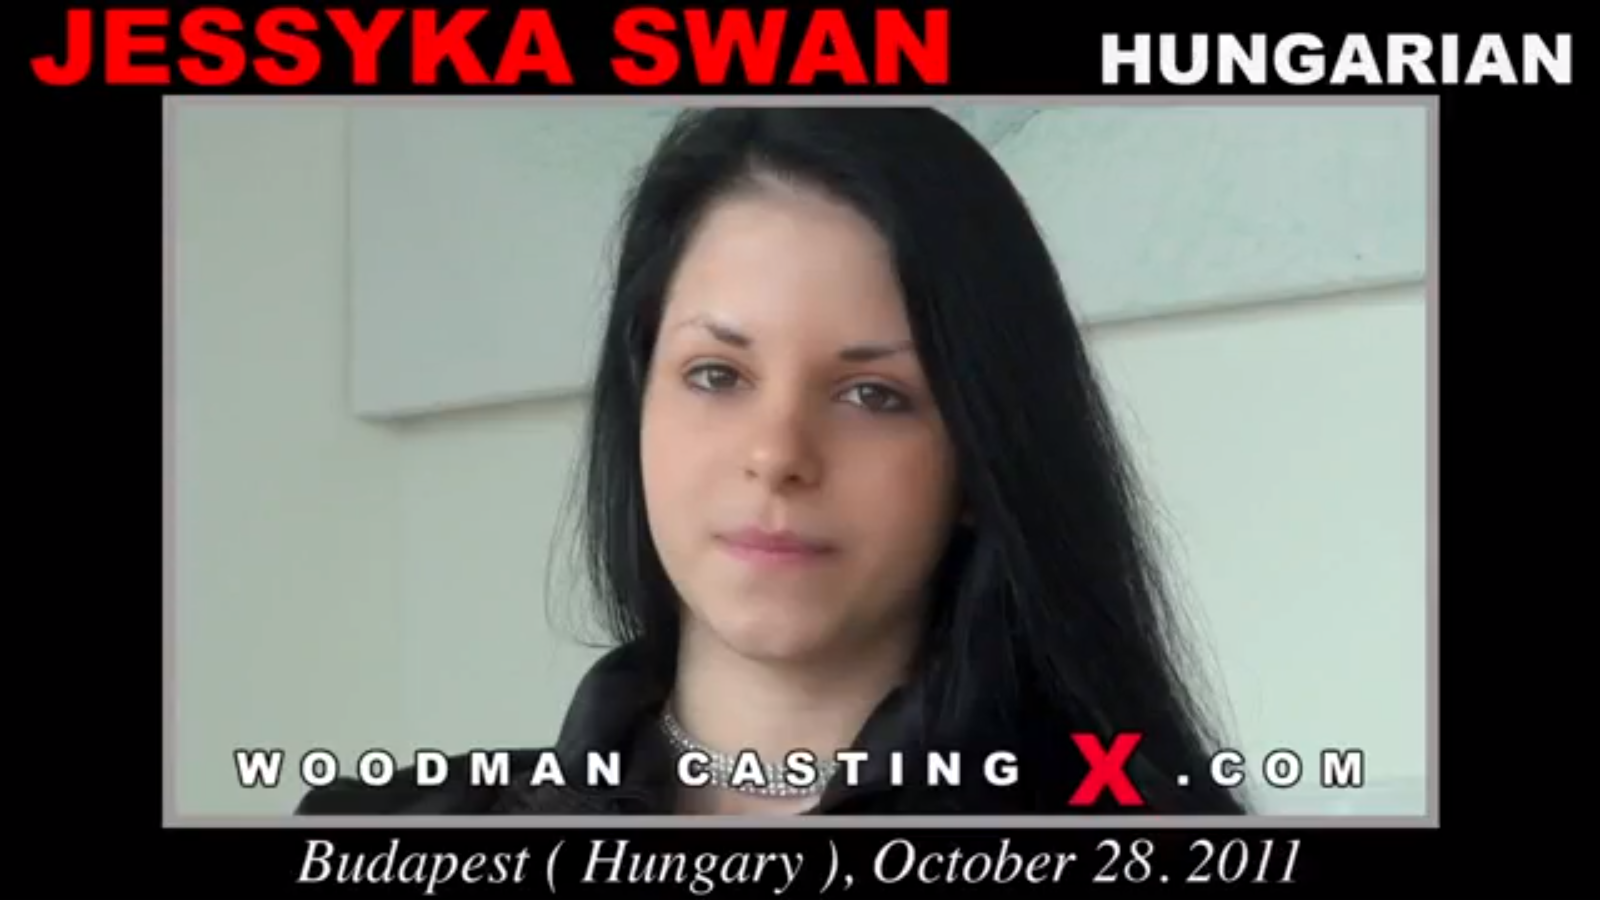 Woodman+casting+X+-+Jessyka+Swan.png